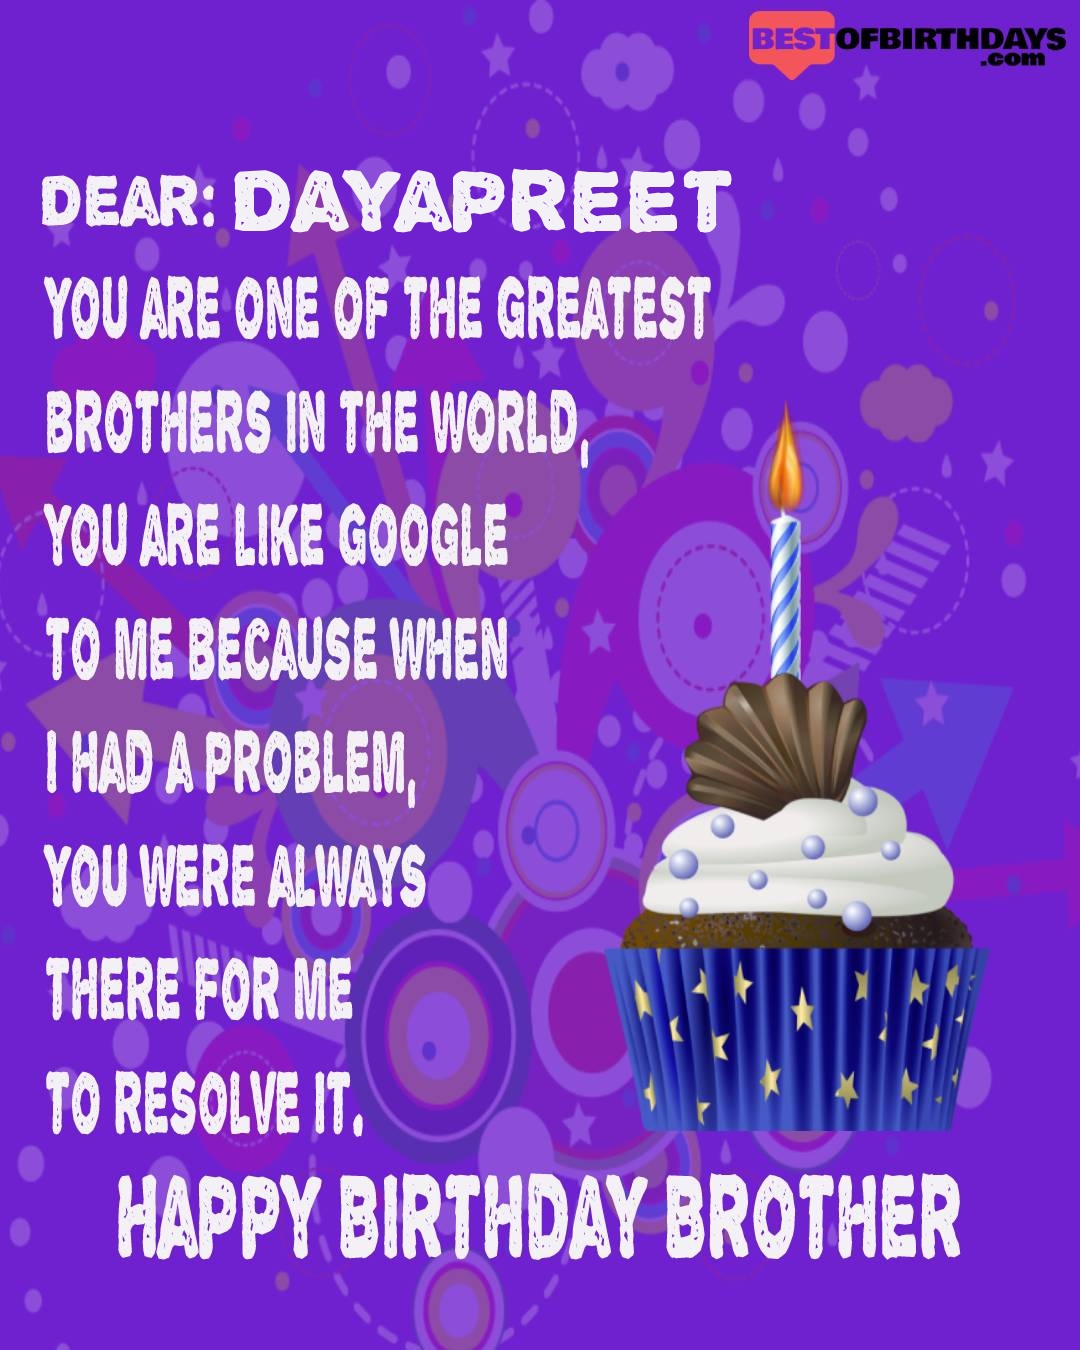 Happy birthday dayapreet bhai brother bro